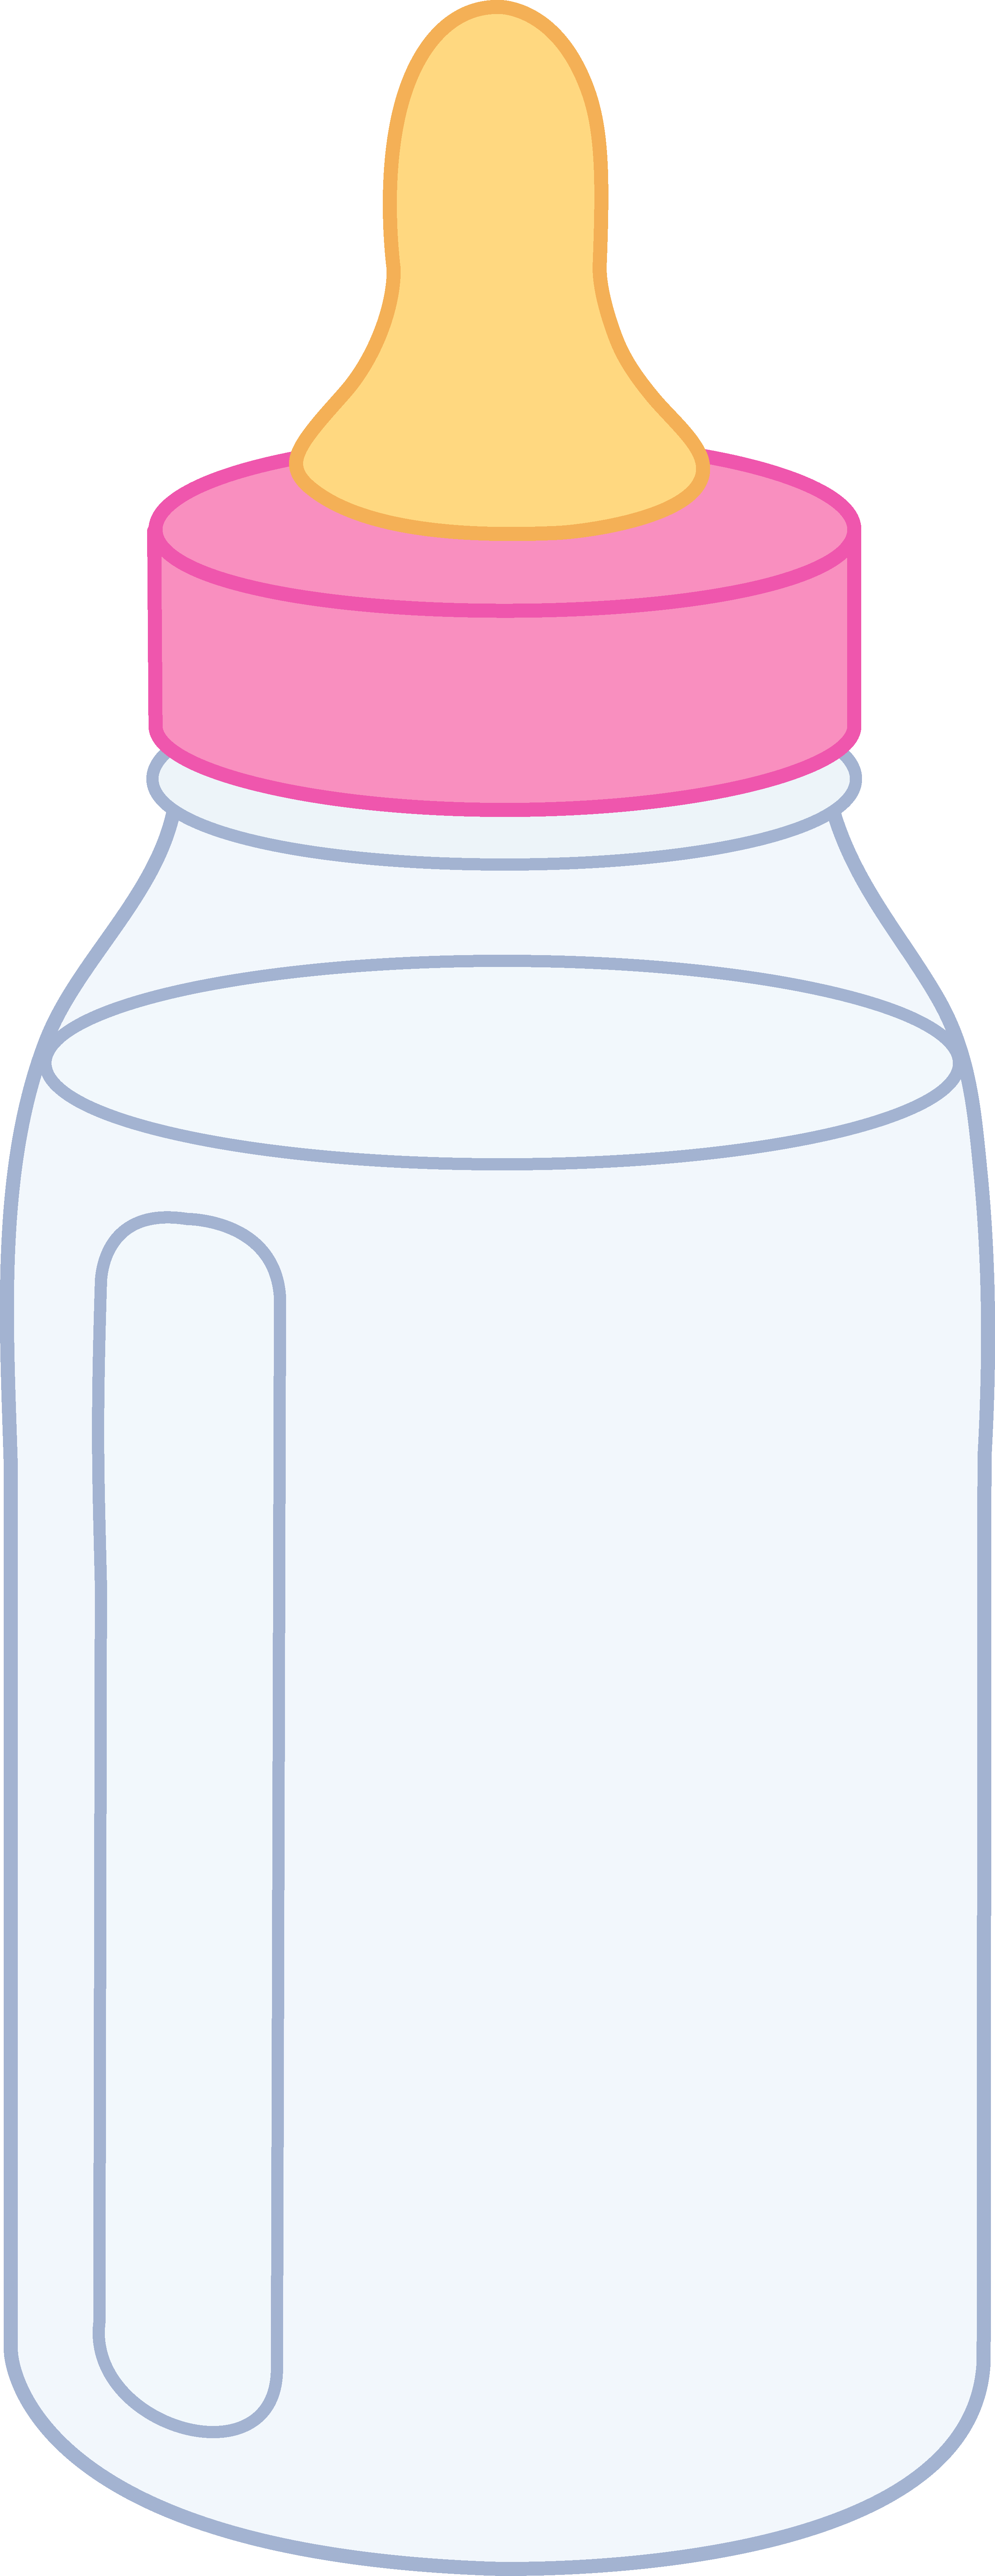 feeding-bottle-cartoon-images-baby-bottles-clipart-bodbocwasuon